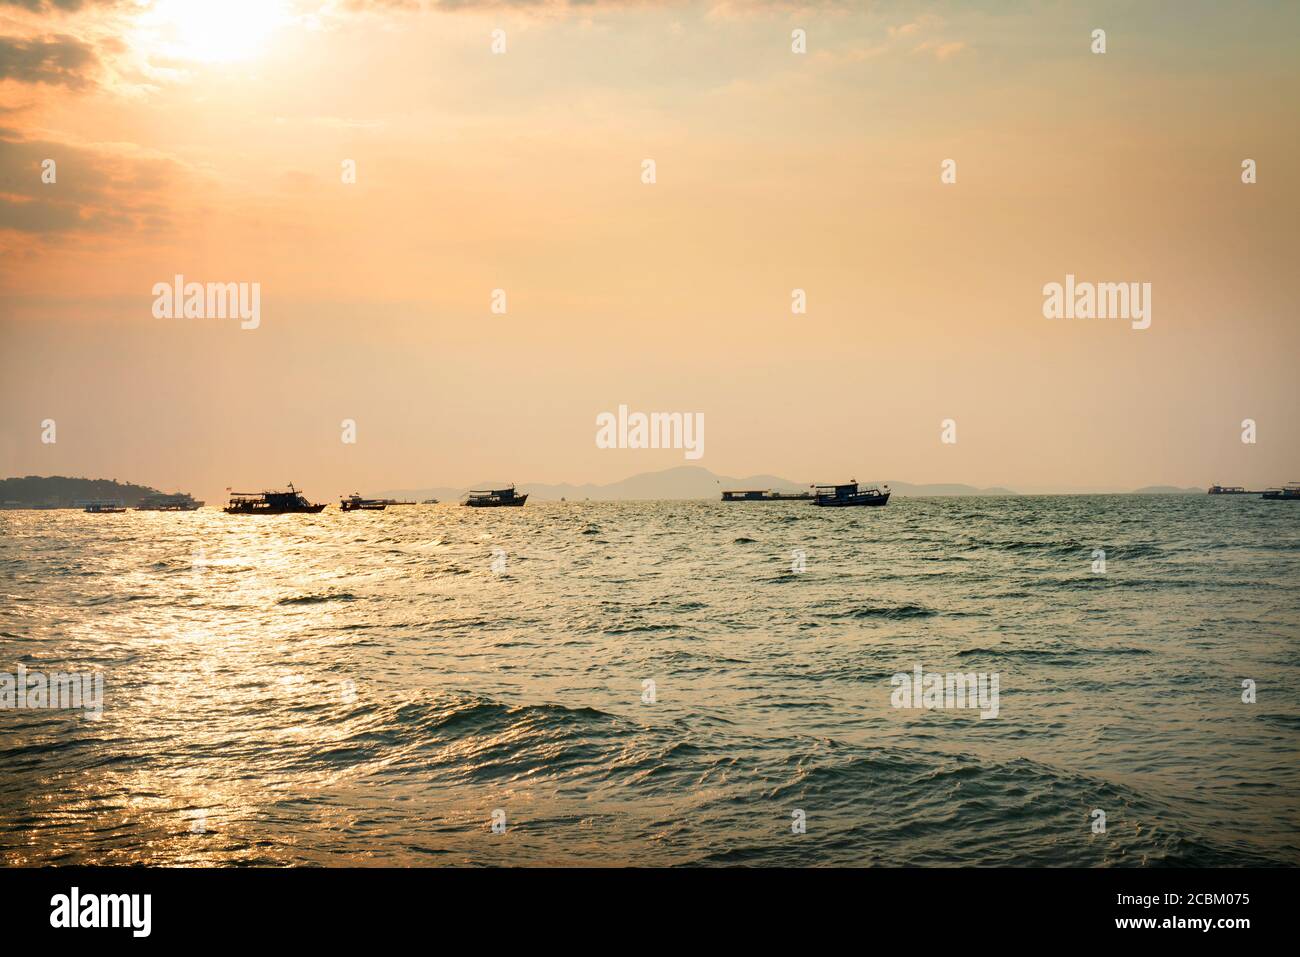 Boats on sea in distance, Koh Samet, Thailand Stock Photo